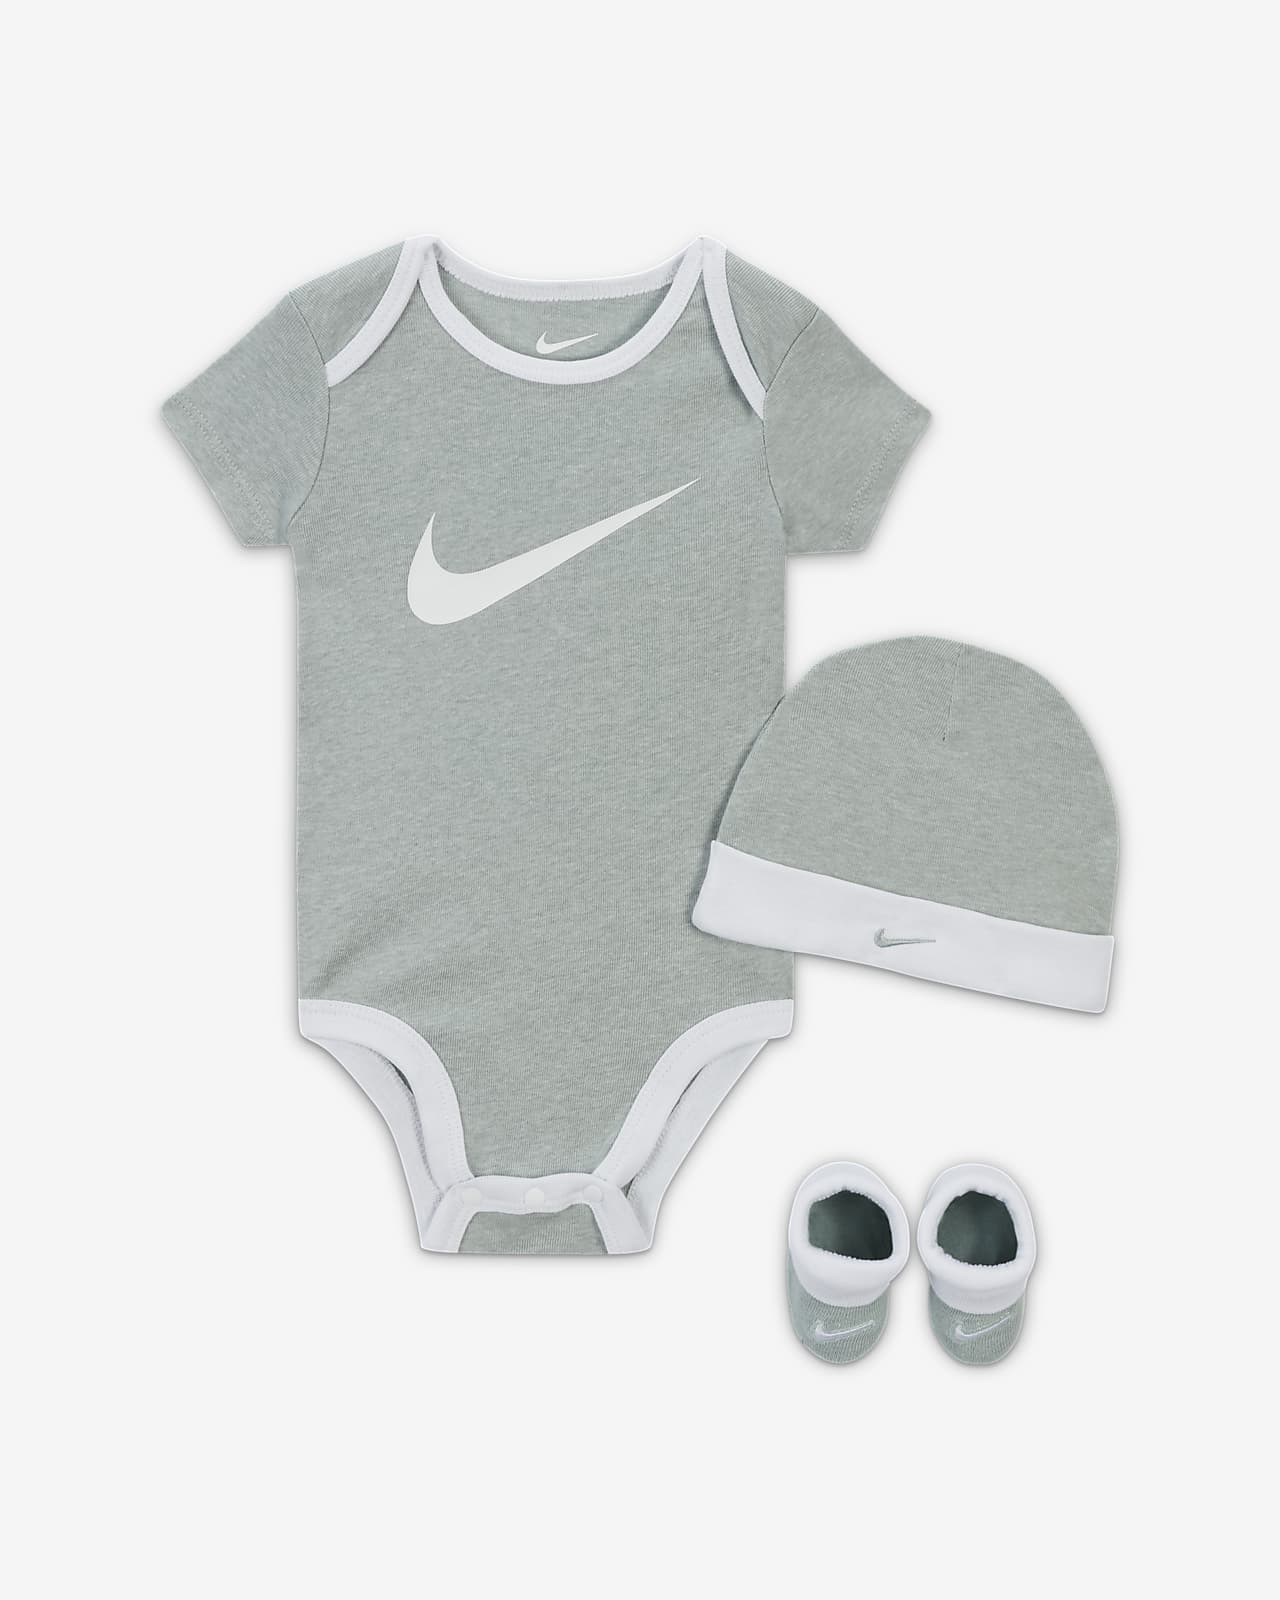 Conjunto de body, gorro y calzado para bebés (0 a 6 meses) Nike